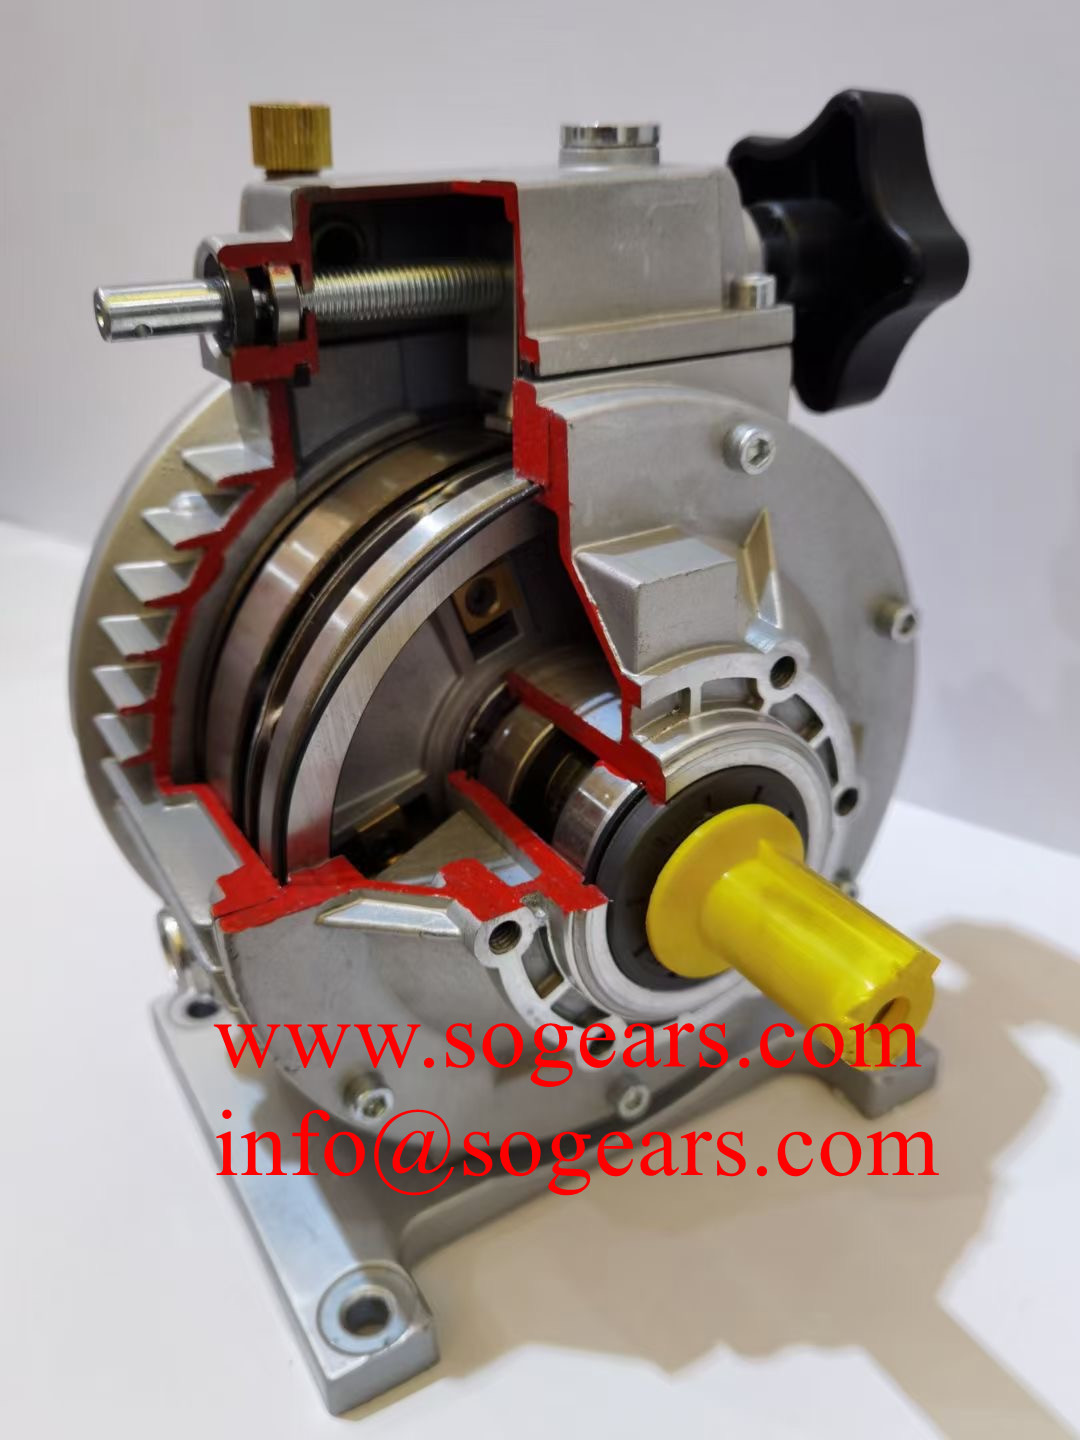 Do you still need XLD4 gear motor and 1.1KW ABB motor?